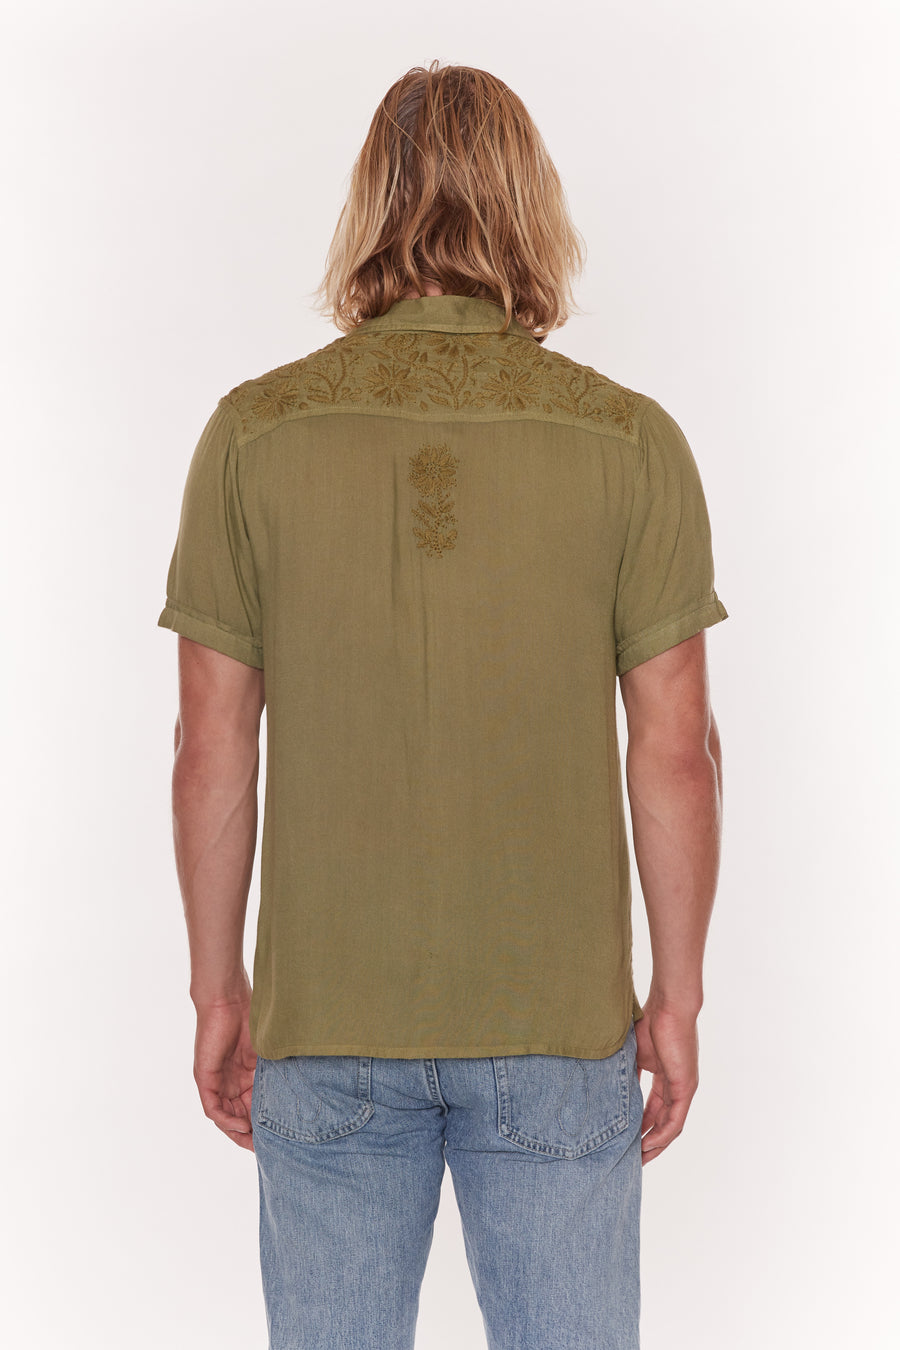 Oak Hallow Embroidered Shirt